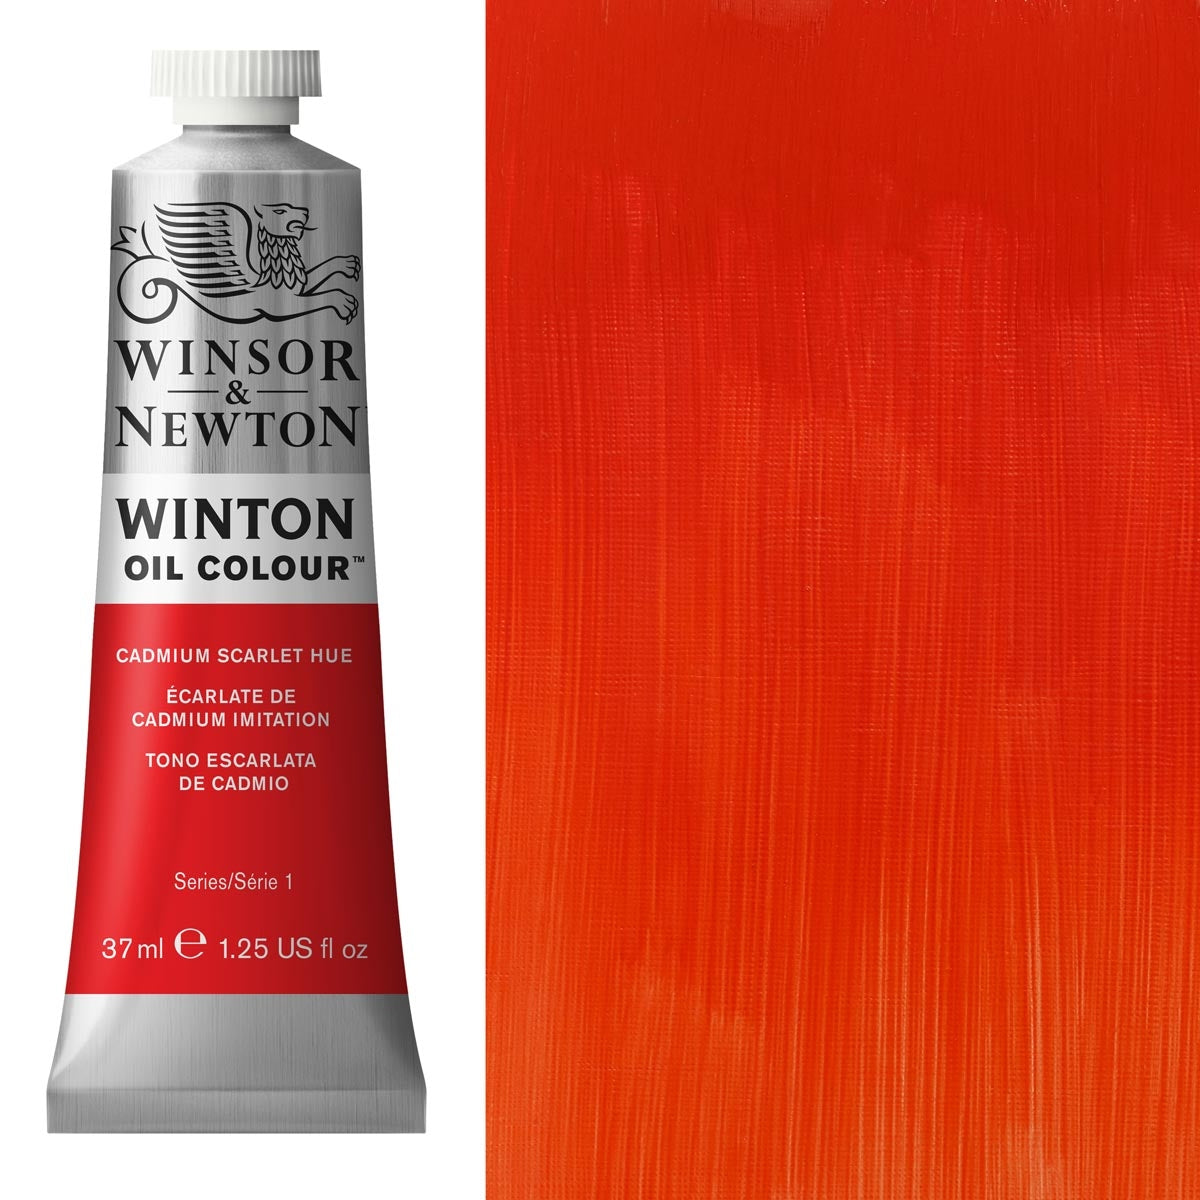 Winsor e Newton - Winton Olio Colore-37ml - Cad Scarlet Hue